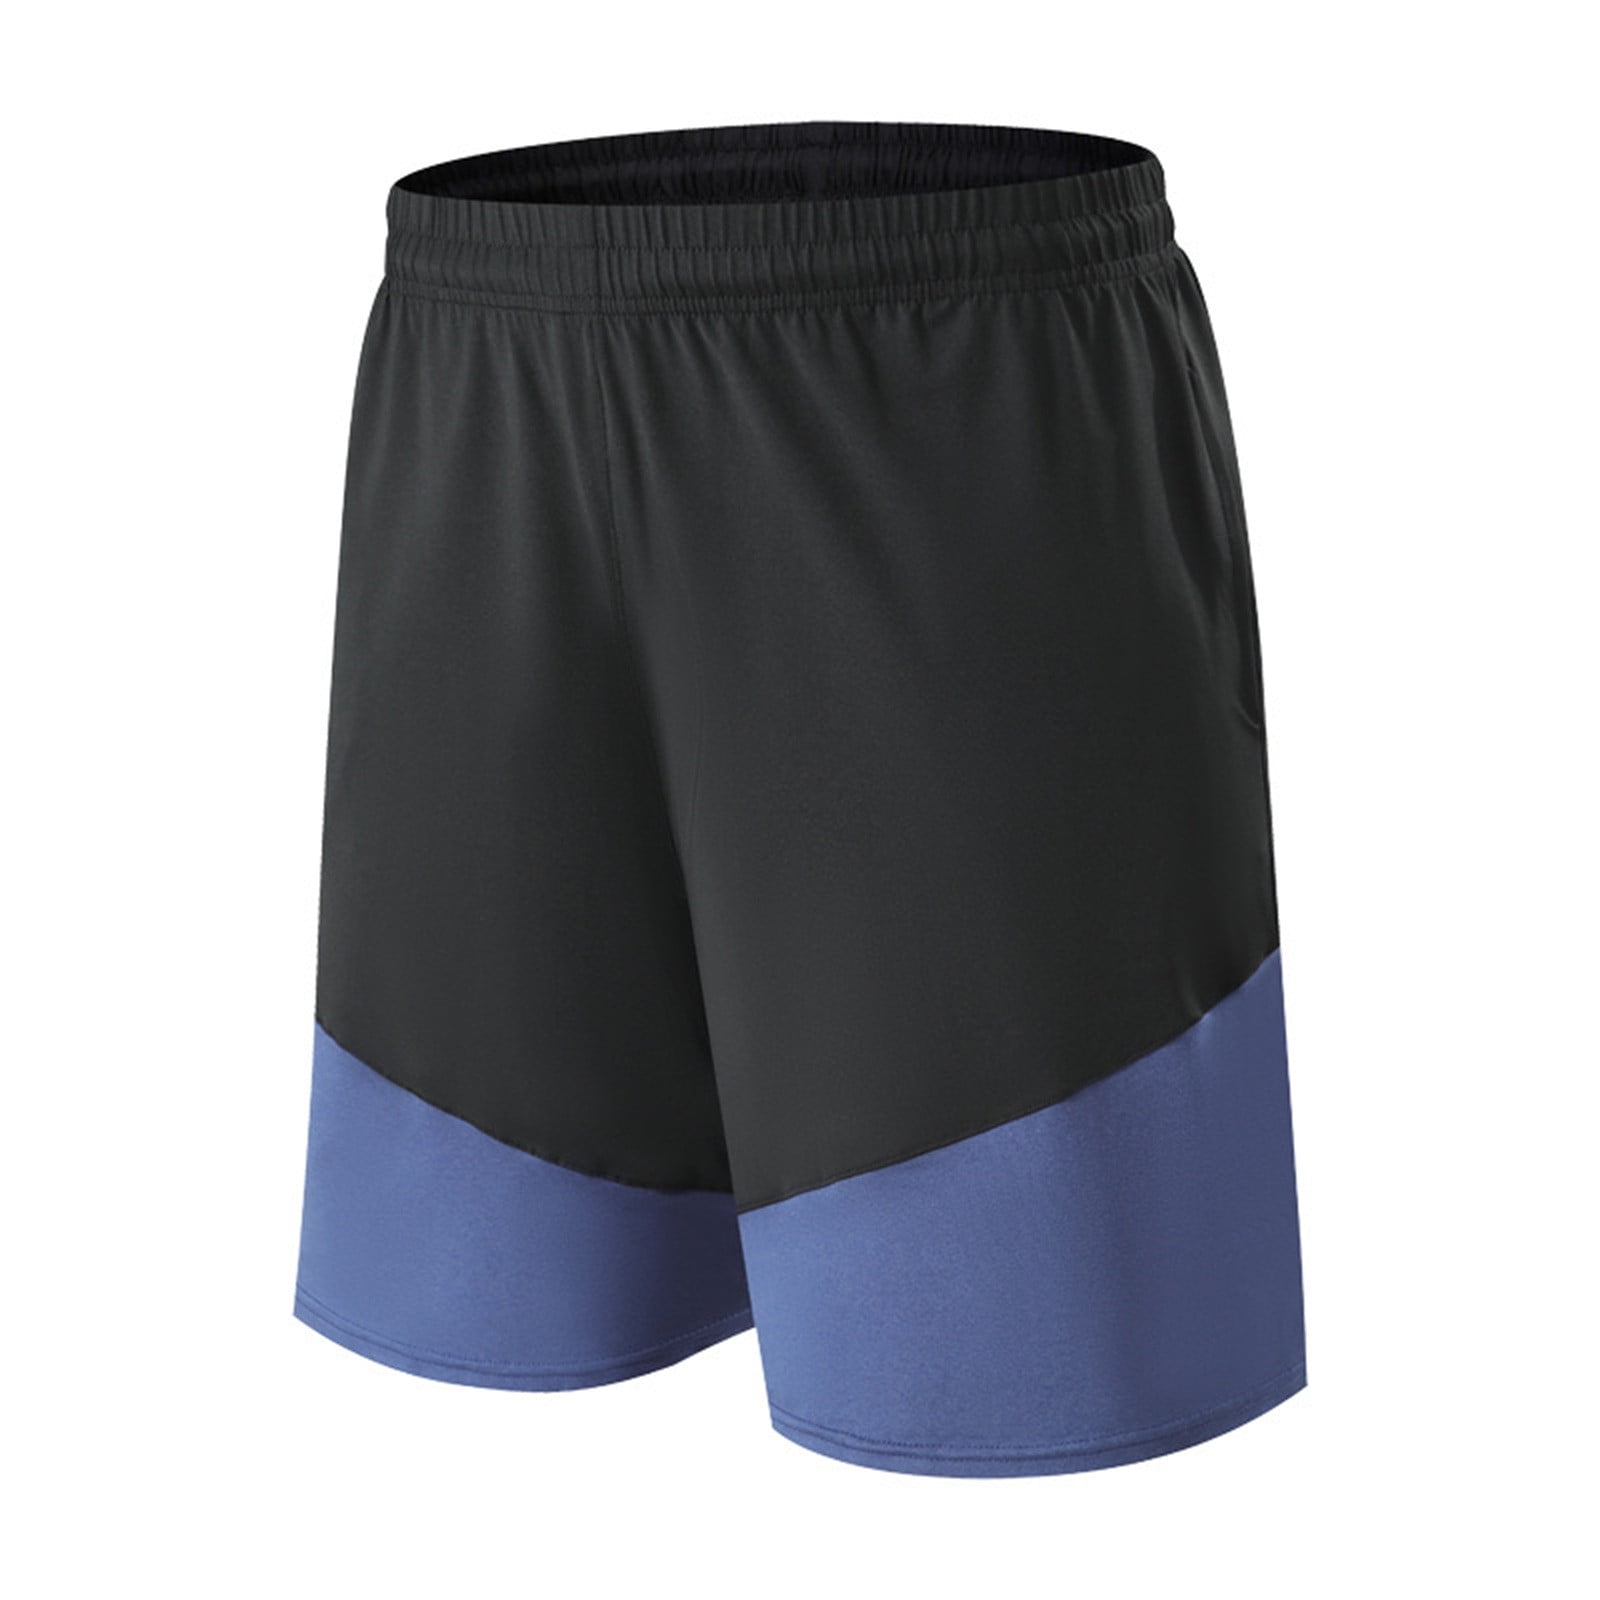 Women Summer Breathable Sweatproof Elastic Sports Shorts Running Fitness  Gym Yoga Short Tight Pants Stretch Legging Trousers 